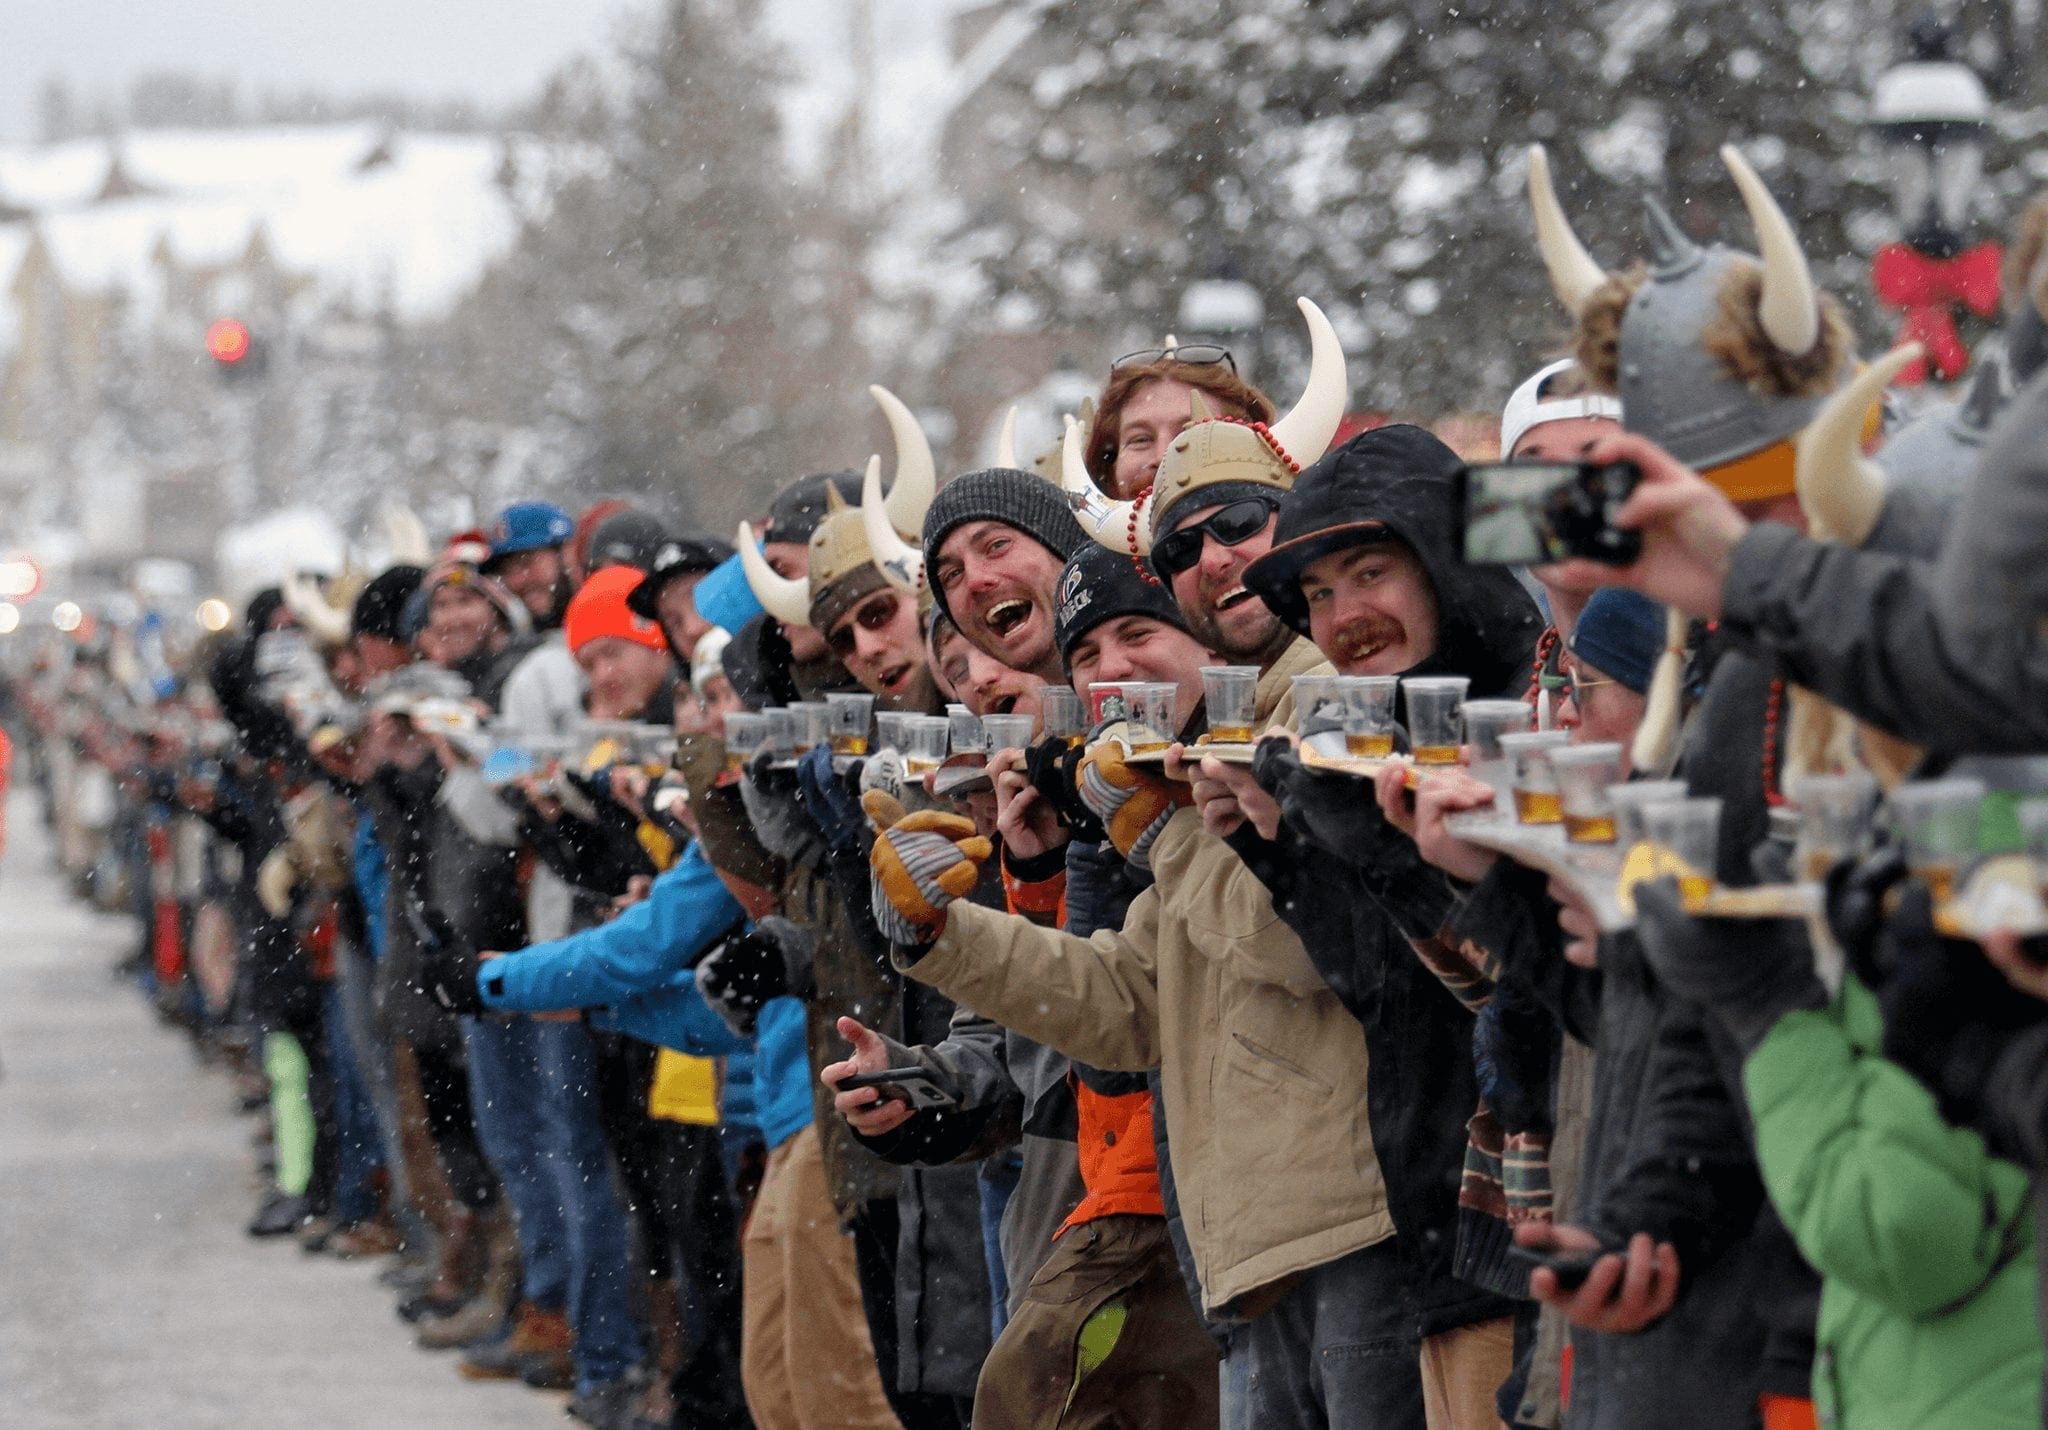 Viking-like crowd at the Breckenridge Distillery World's Longest Shot Ski